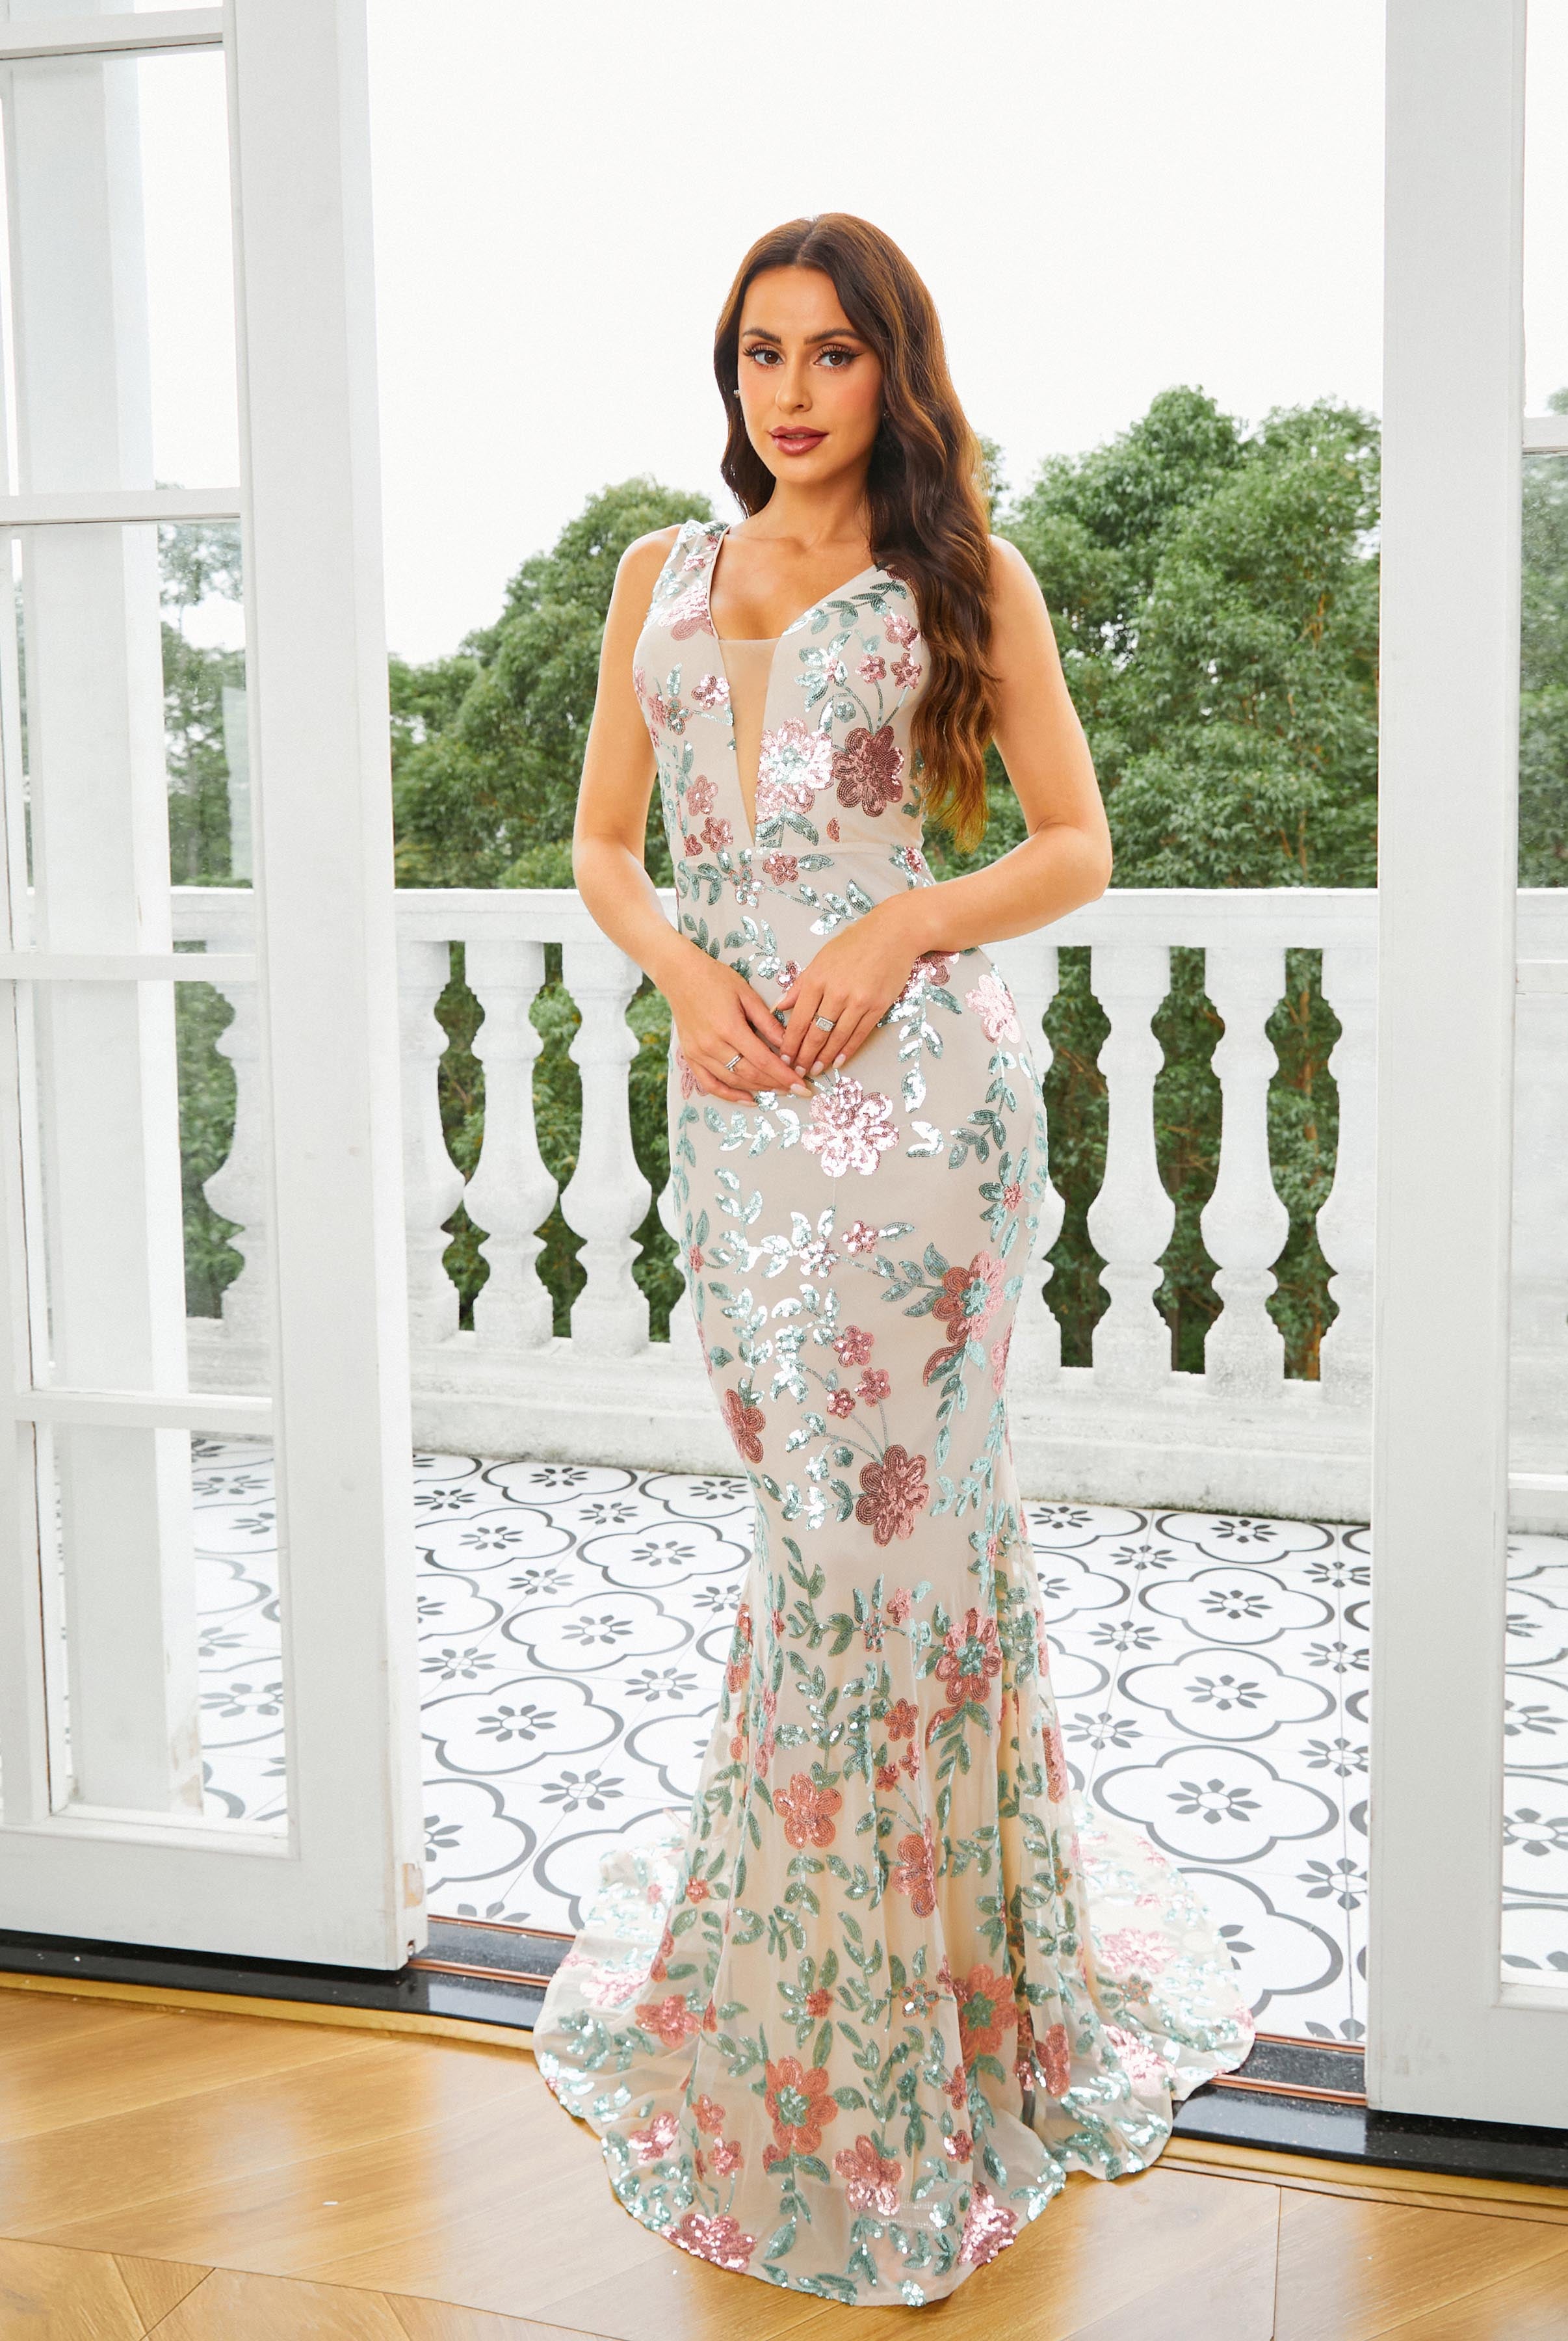 MISSORD Floral V-Neck Backless Sequin Apricot Prom Dress